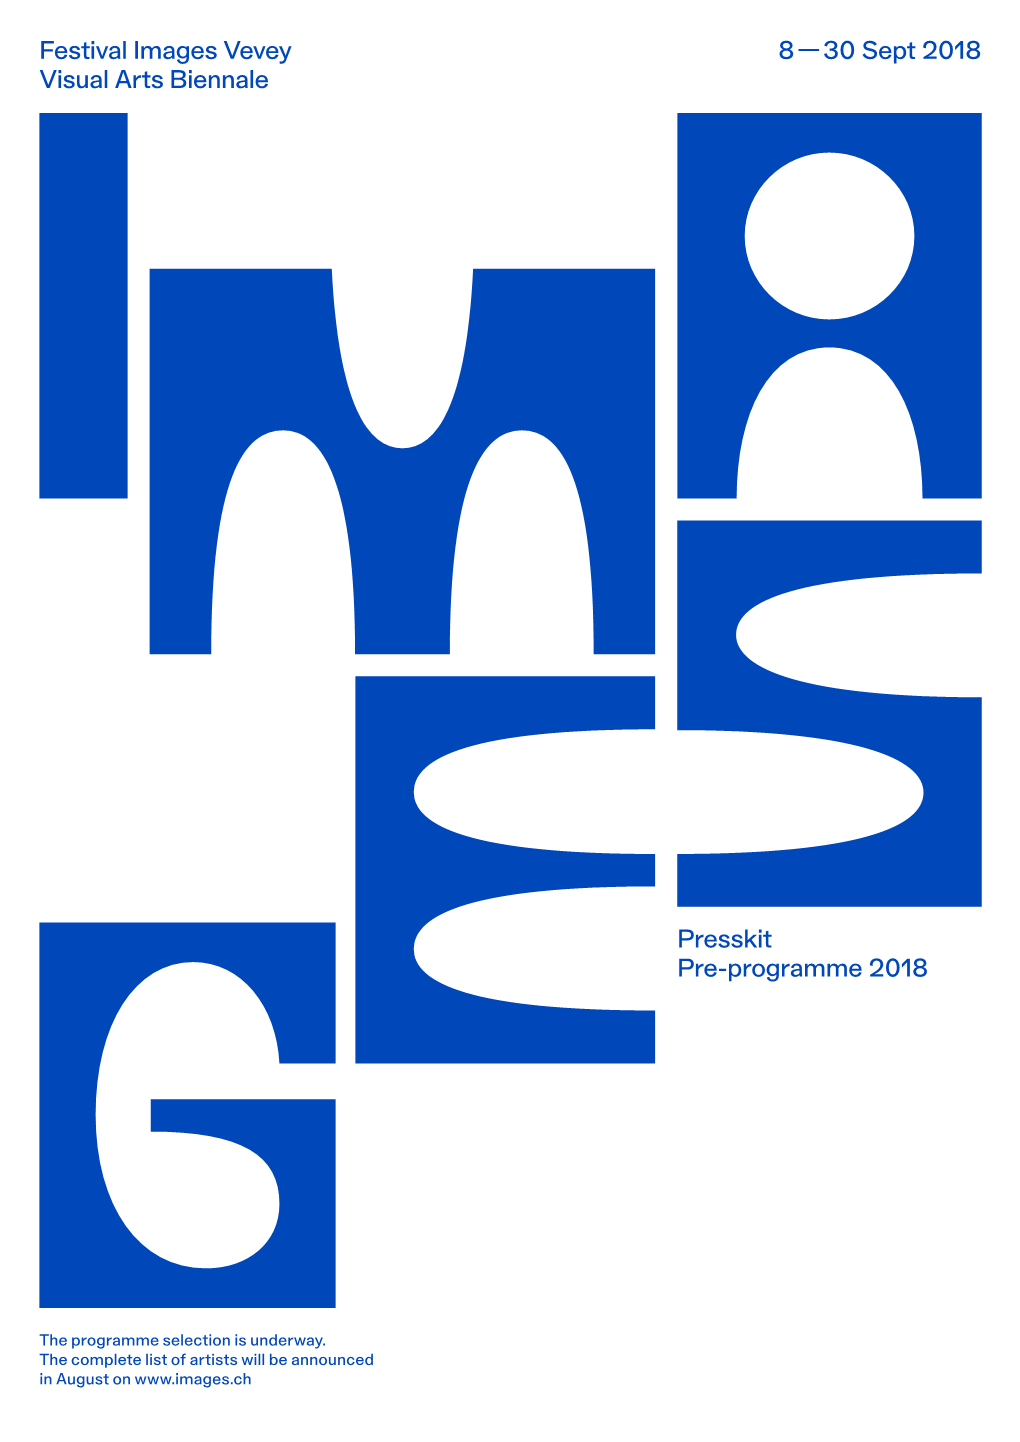 Presskit Pre-Programme 2018 Festival Images Vevey 8